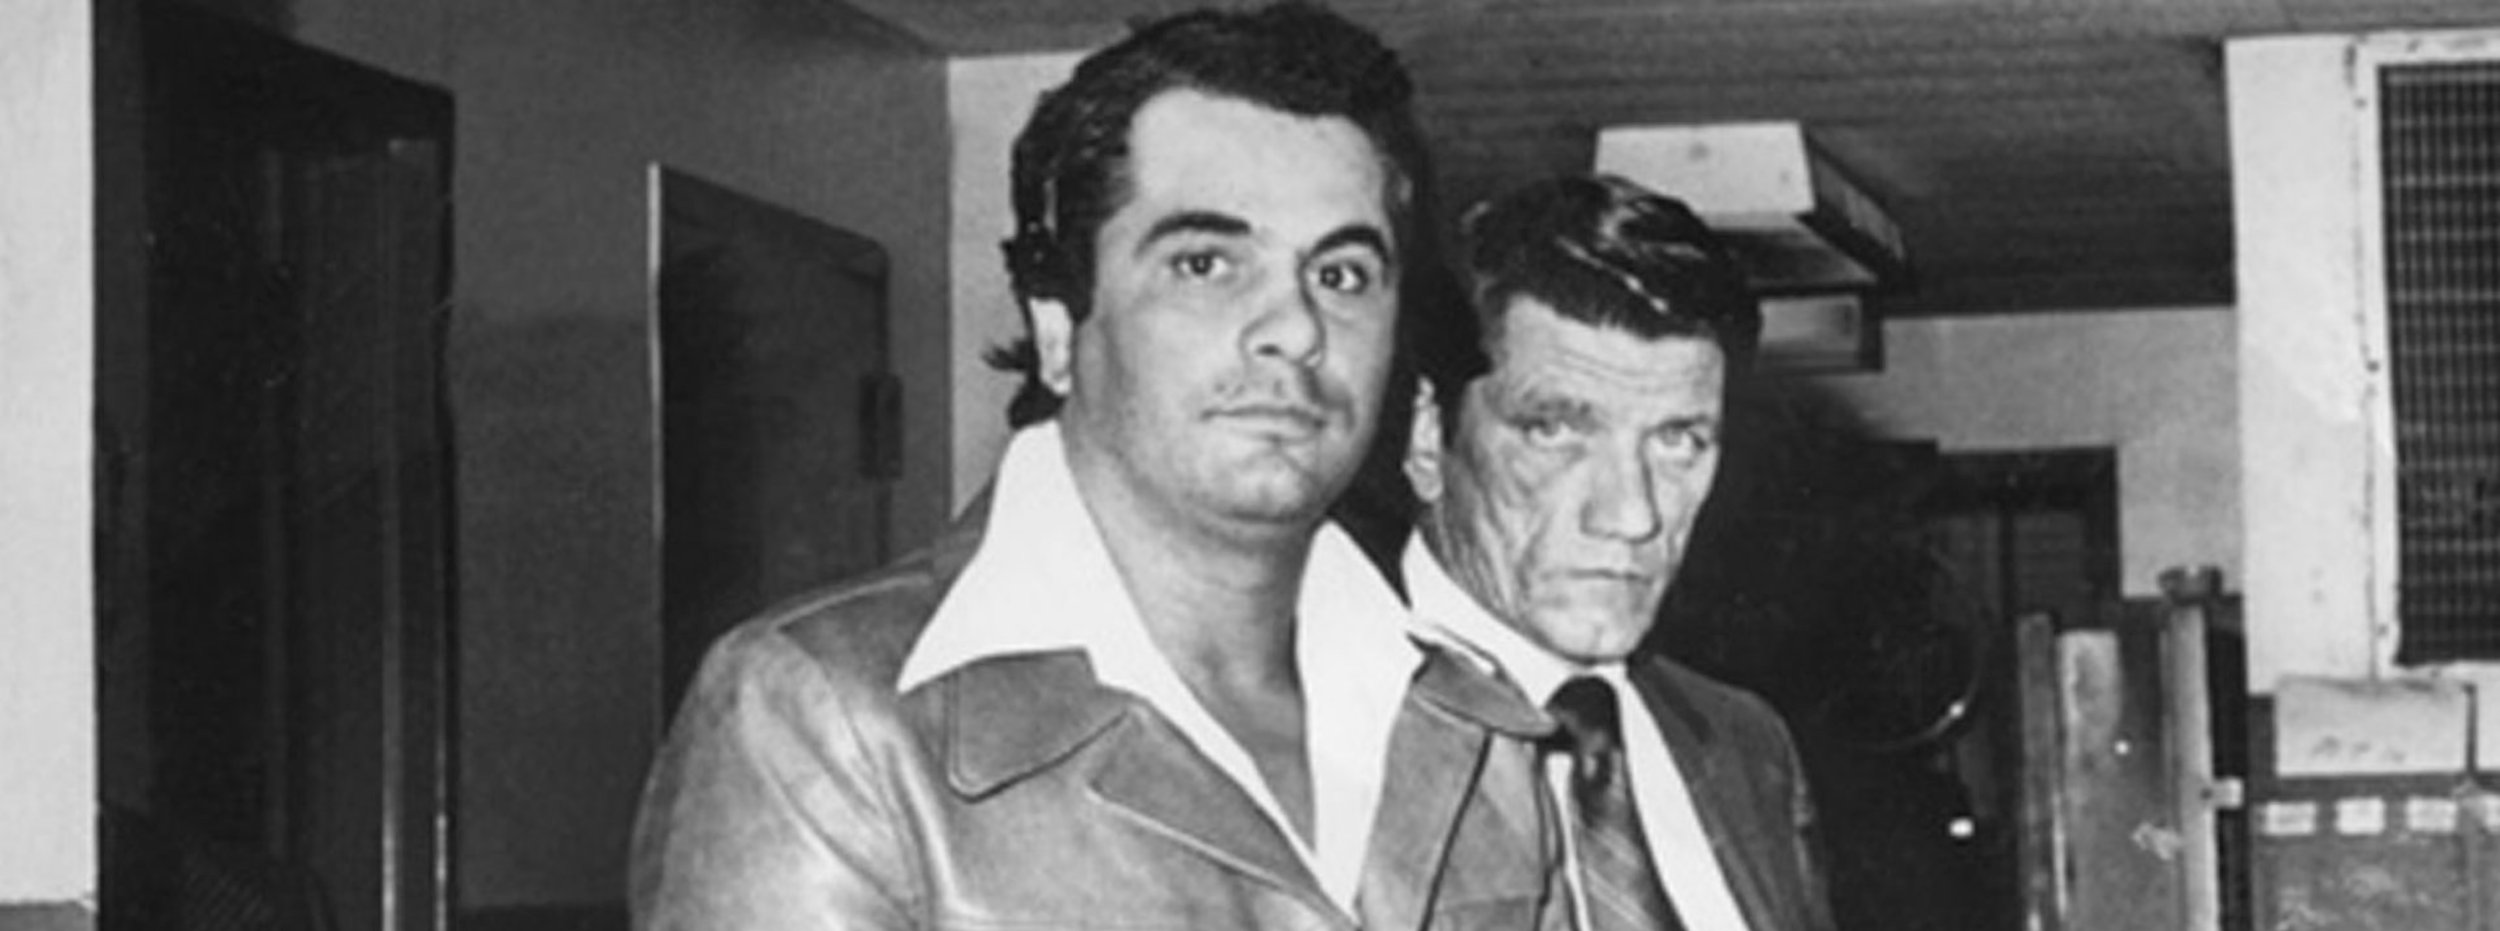 Watch The Iceman Confesses: Secrets of a Mafia Hitman: America Undercover  (HBO)